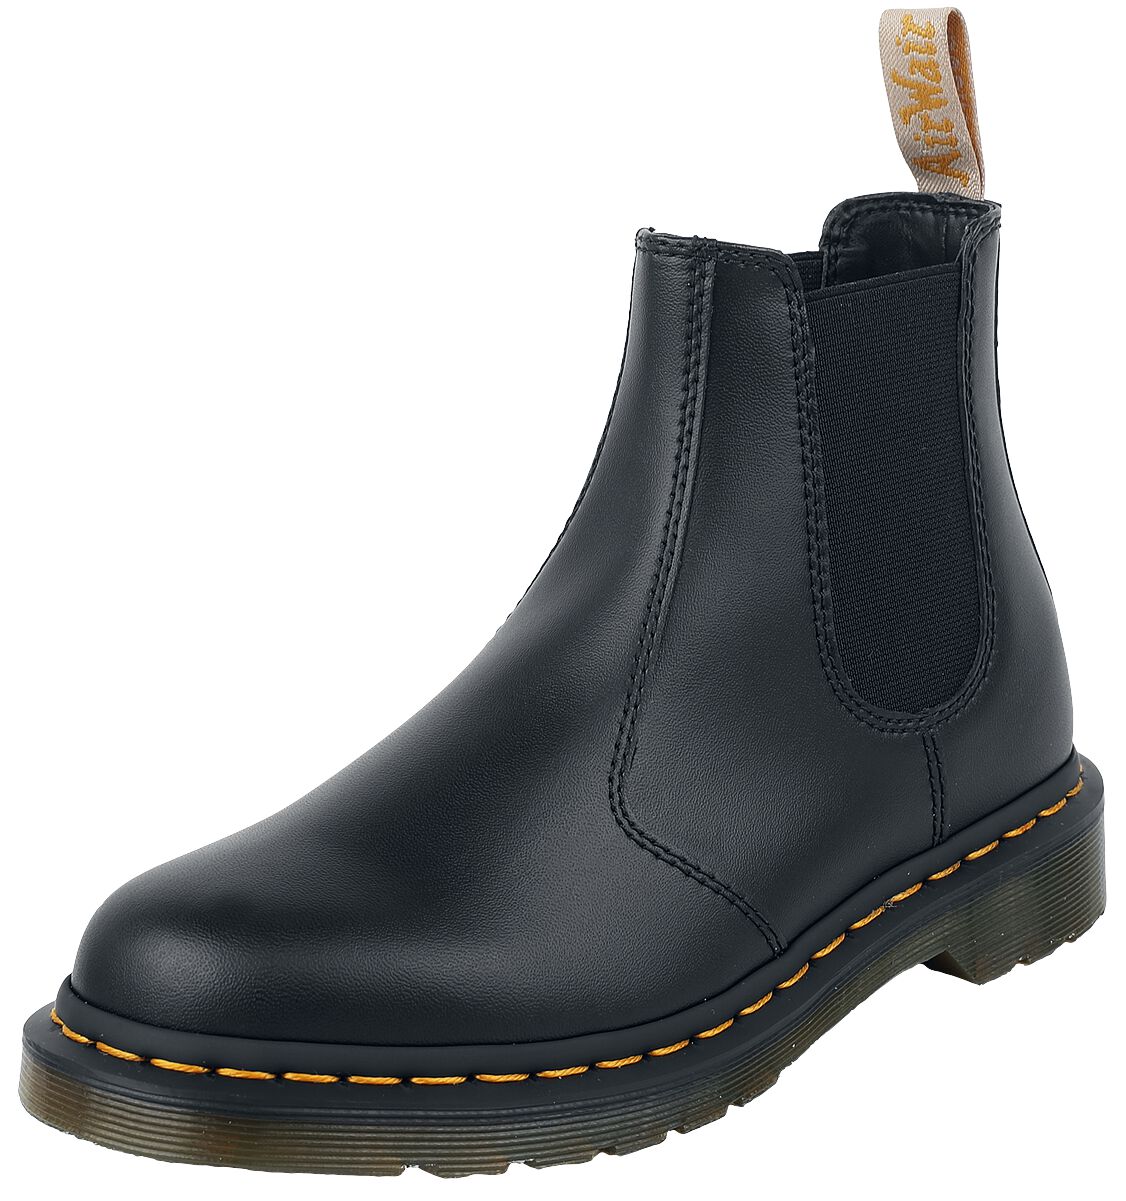 Dr. Martens - Rockabilly Boot - Vegan 2976 Black Felix Rub Off - EU37 bis EU46 - Größe EU39 - schwarz von Dr. Martens